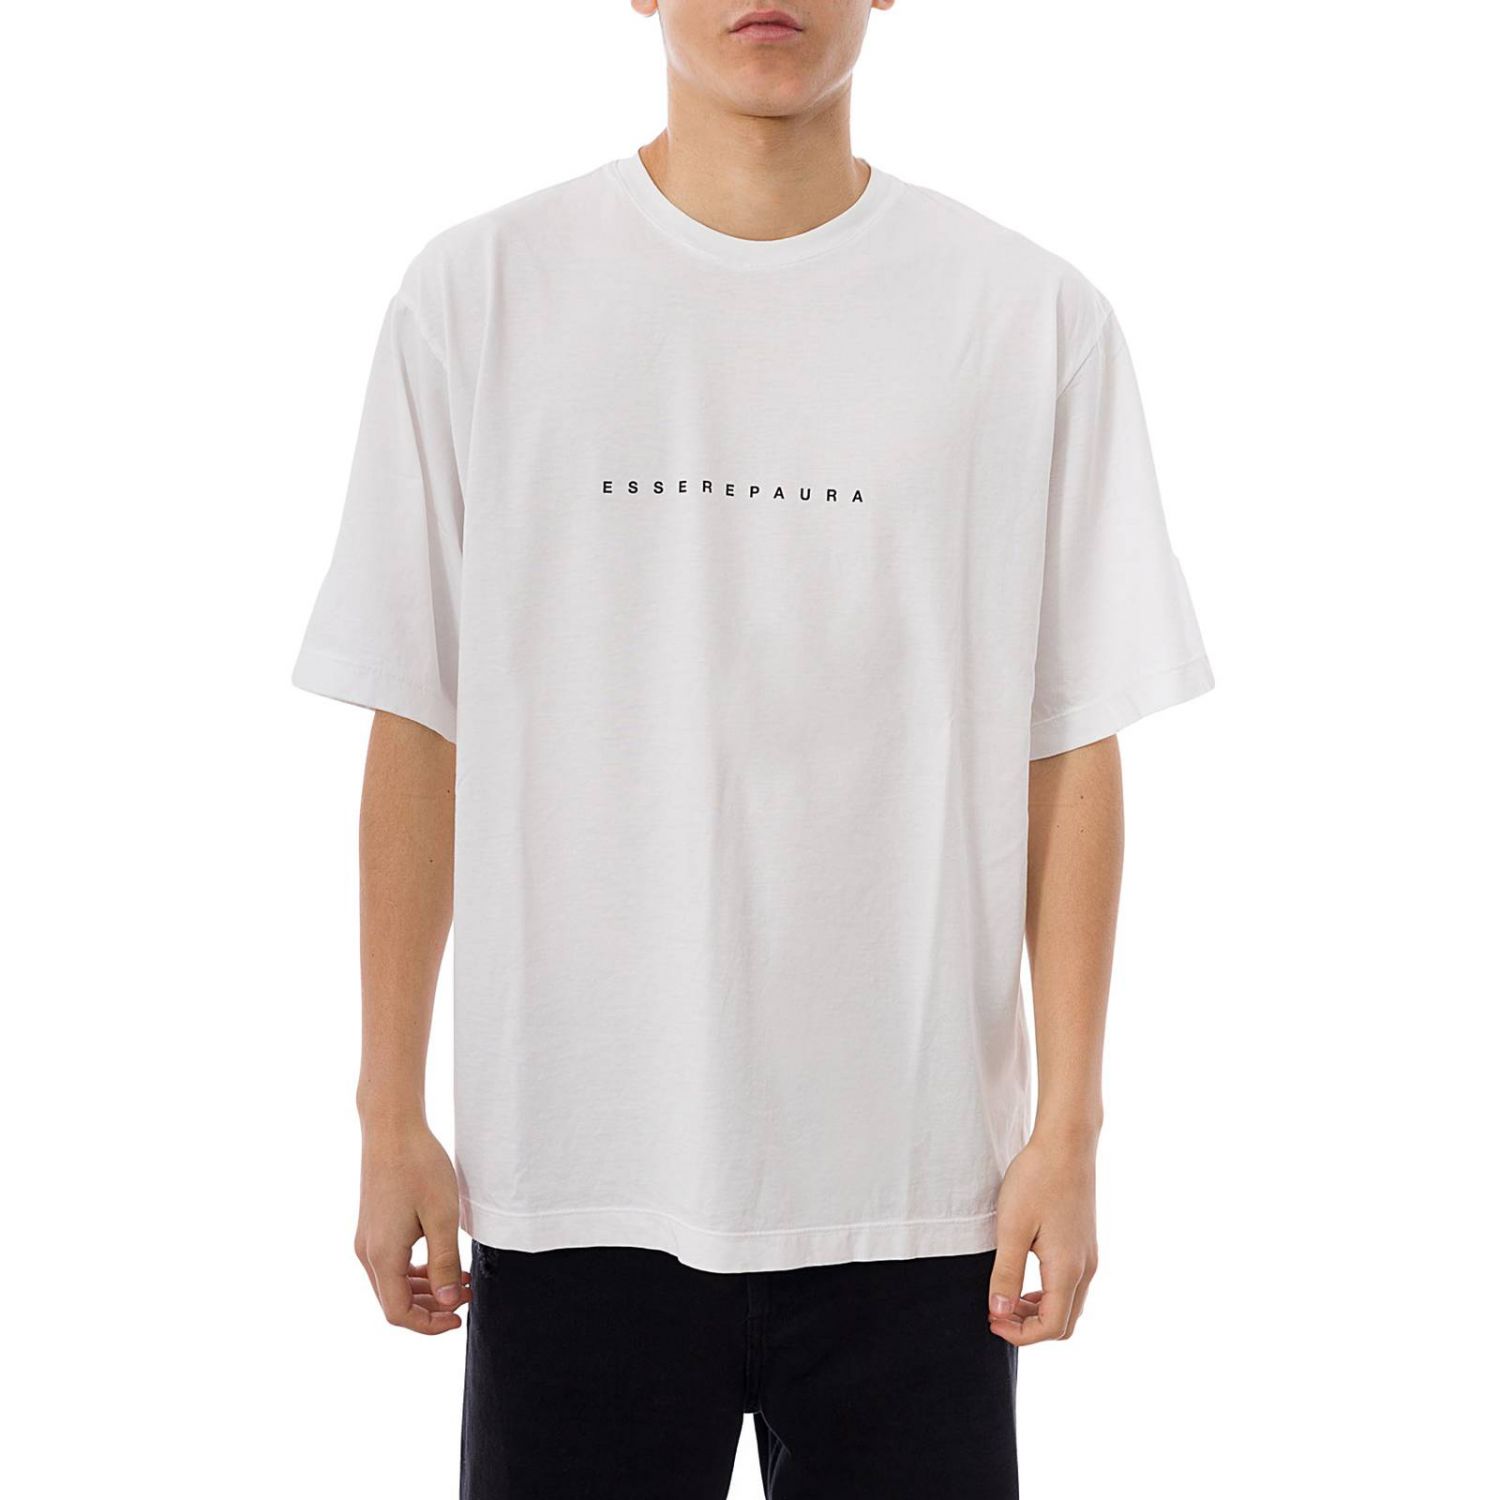 Paura Outlet: T-shirt men Danilo | T-Shirt Paura Men White | T-Shirt ...